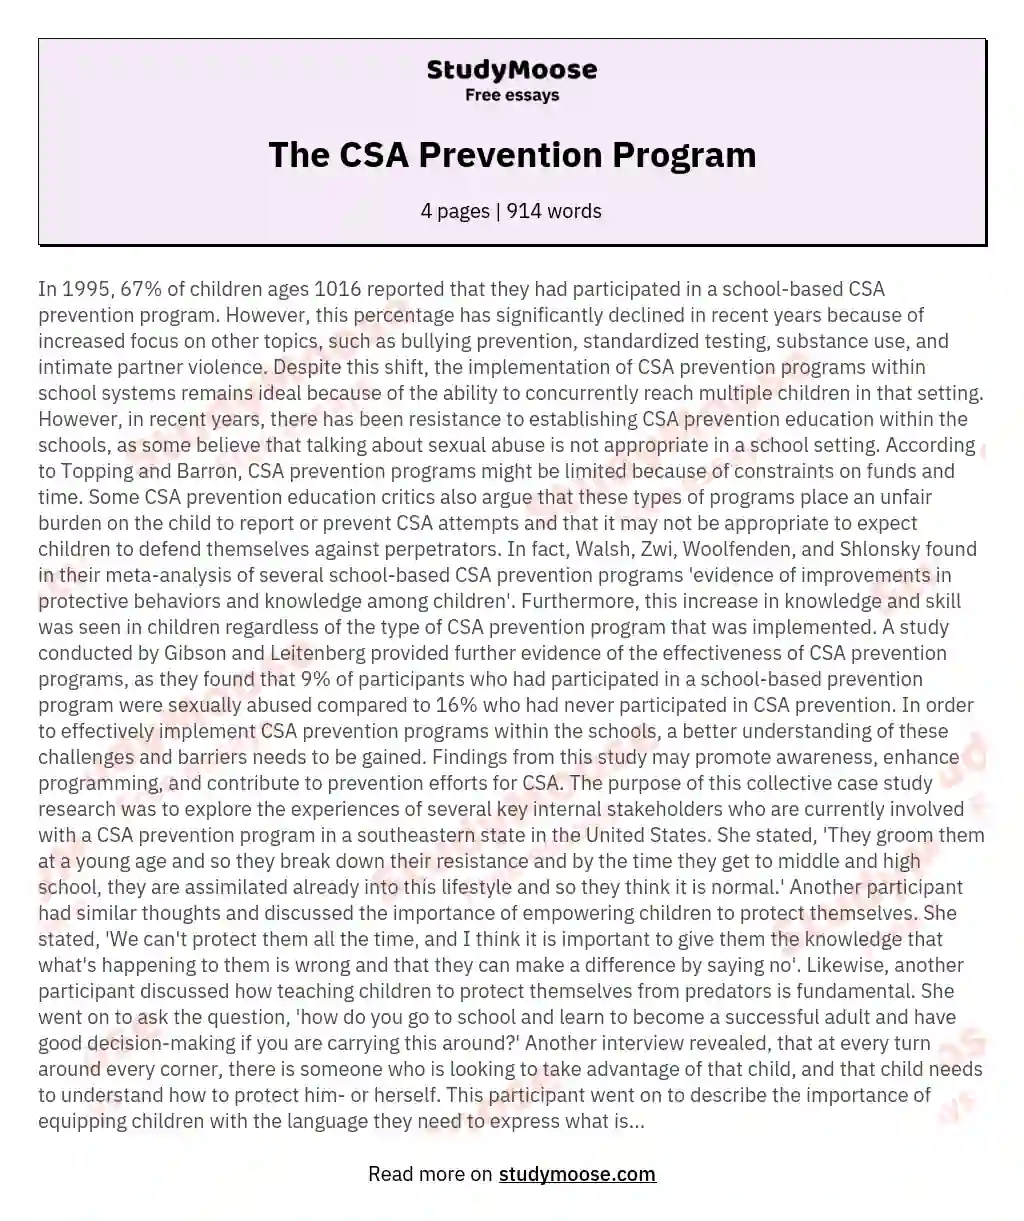 The CSA Prevention Program